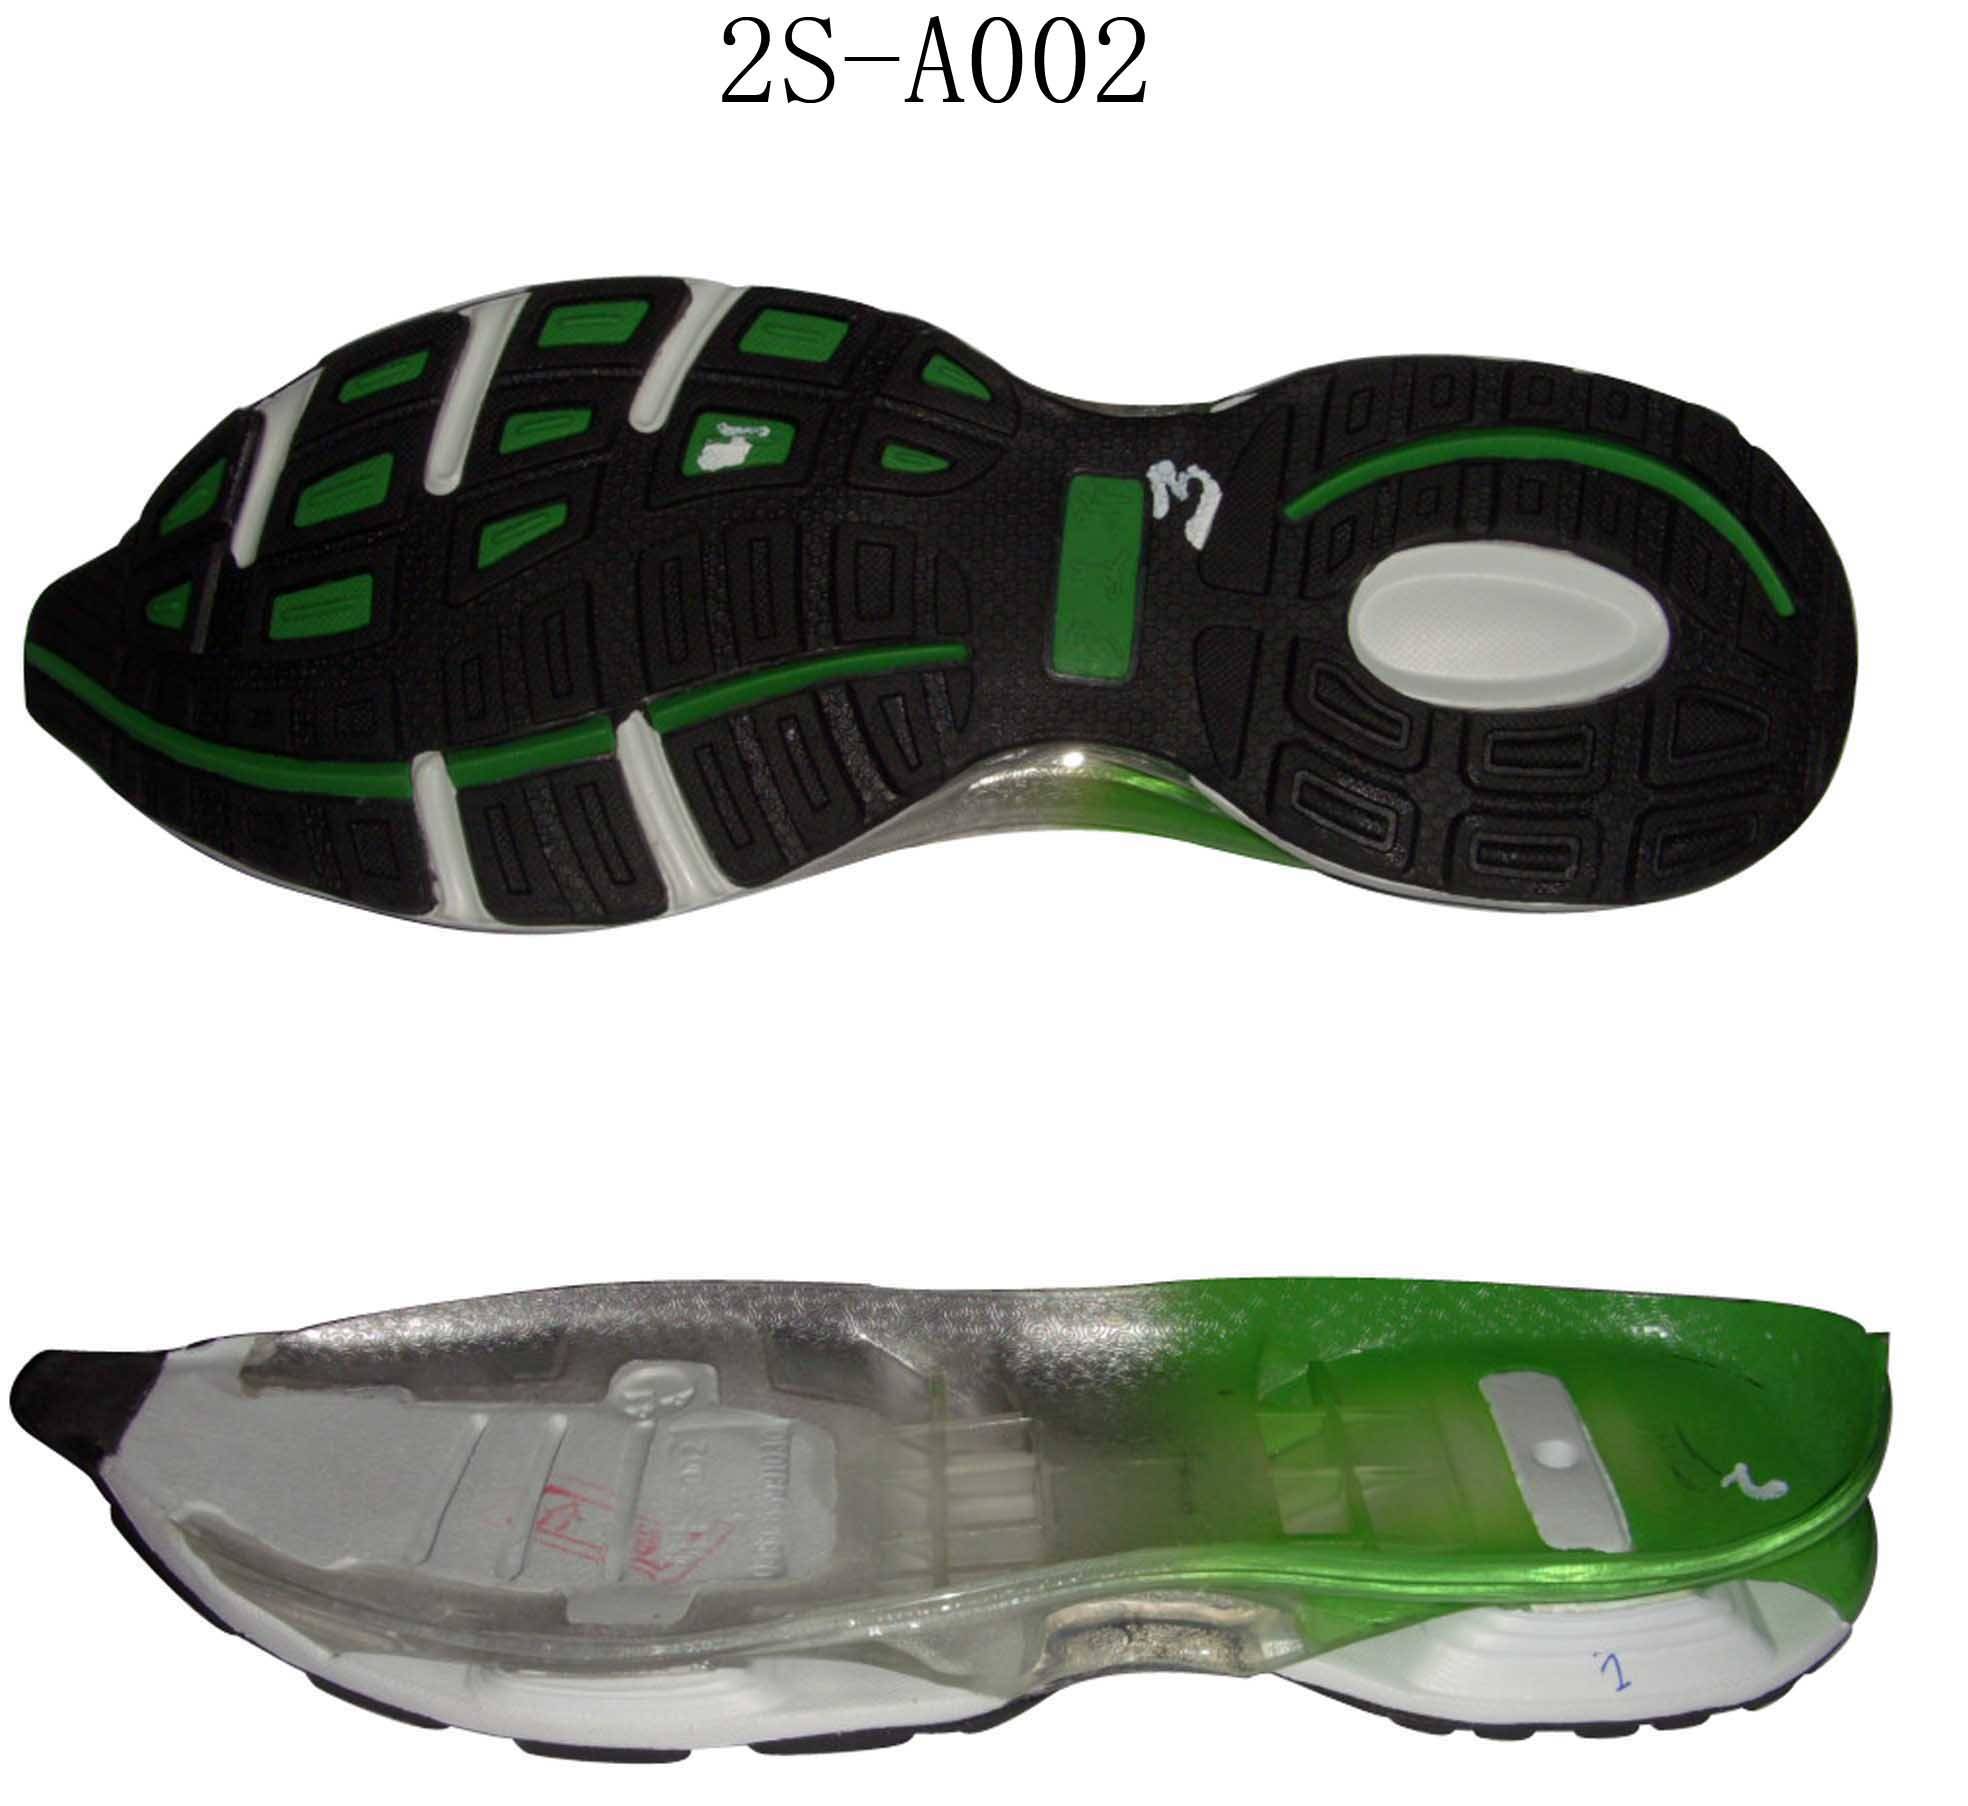 shoe sole company